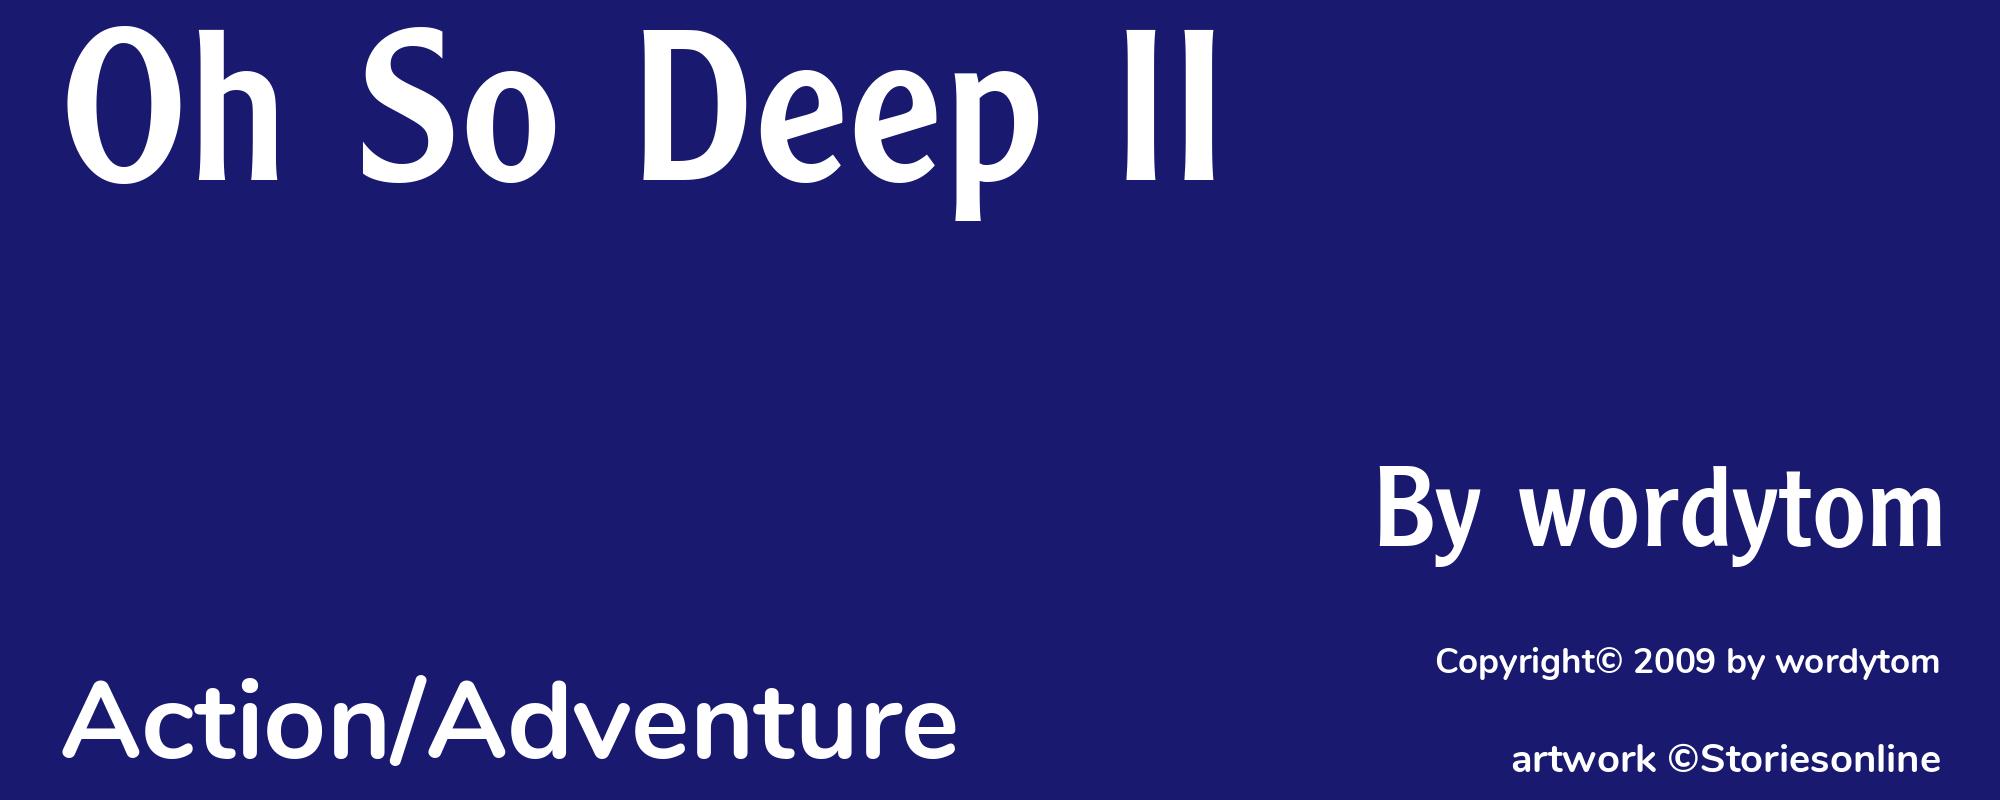 Oh So Deep II - Cover